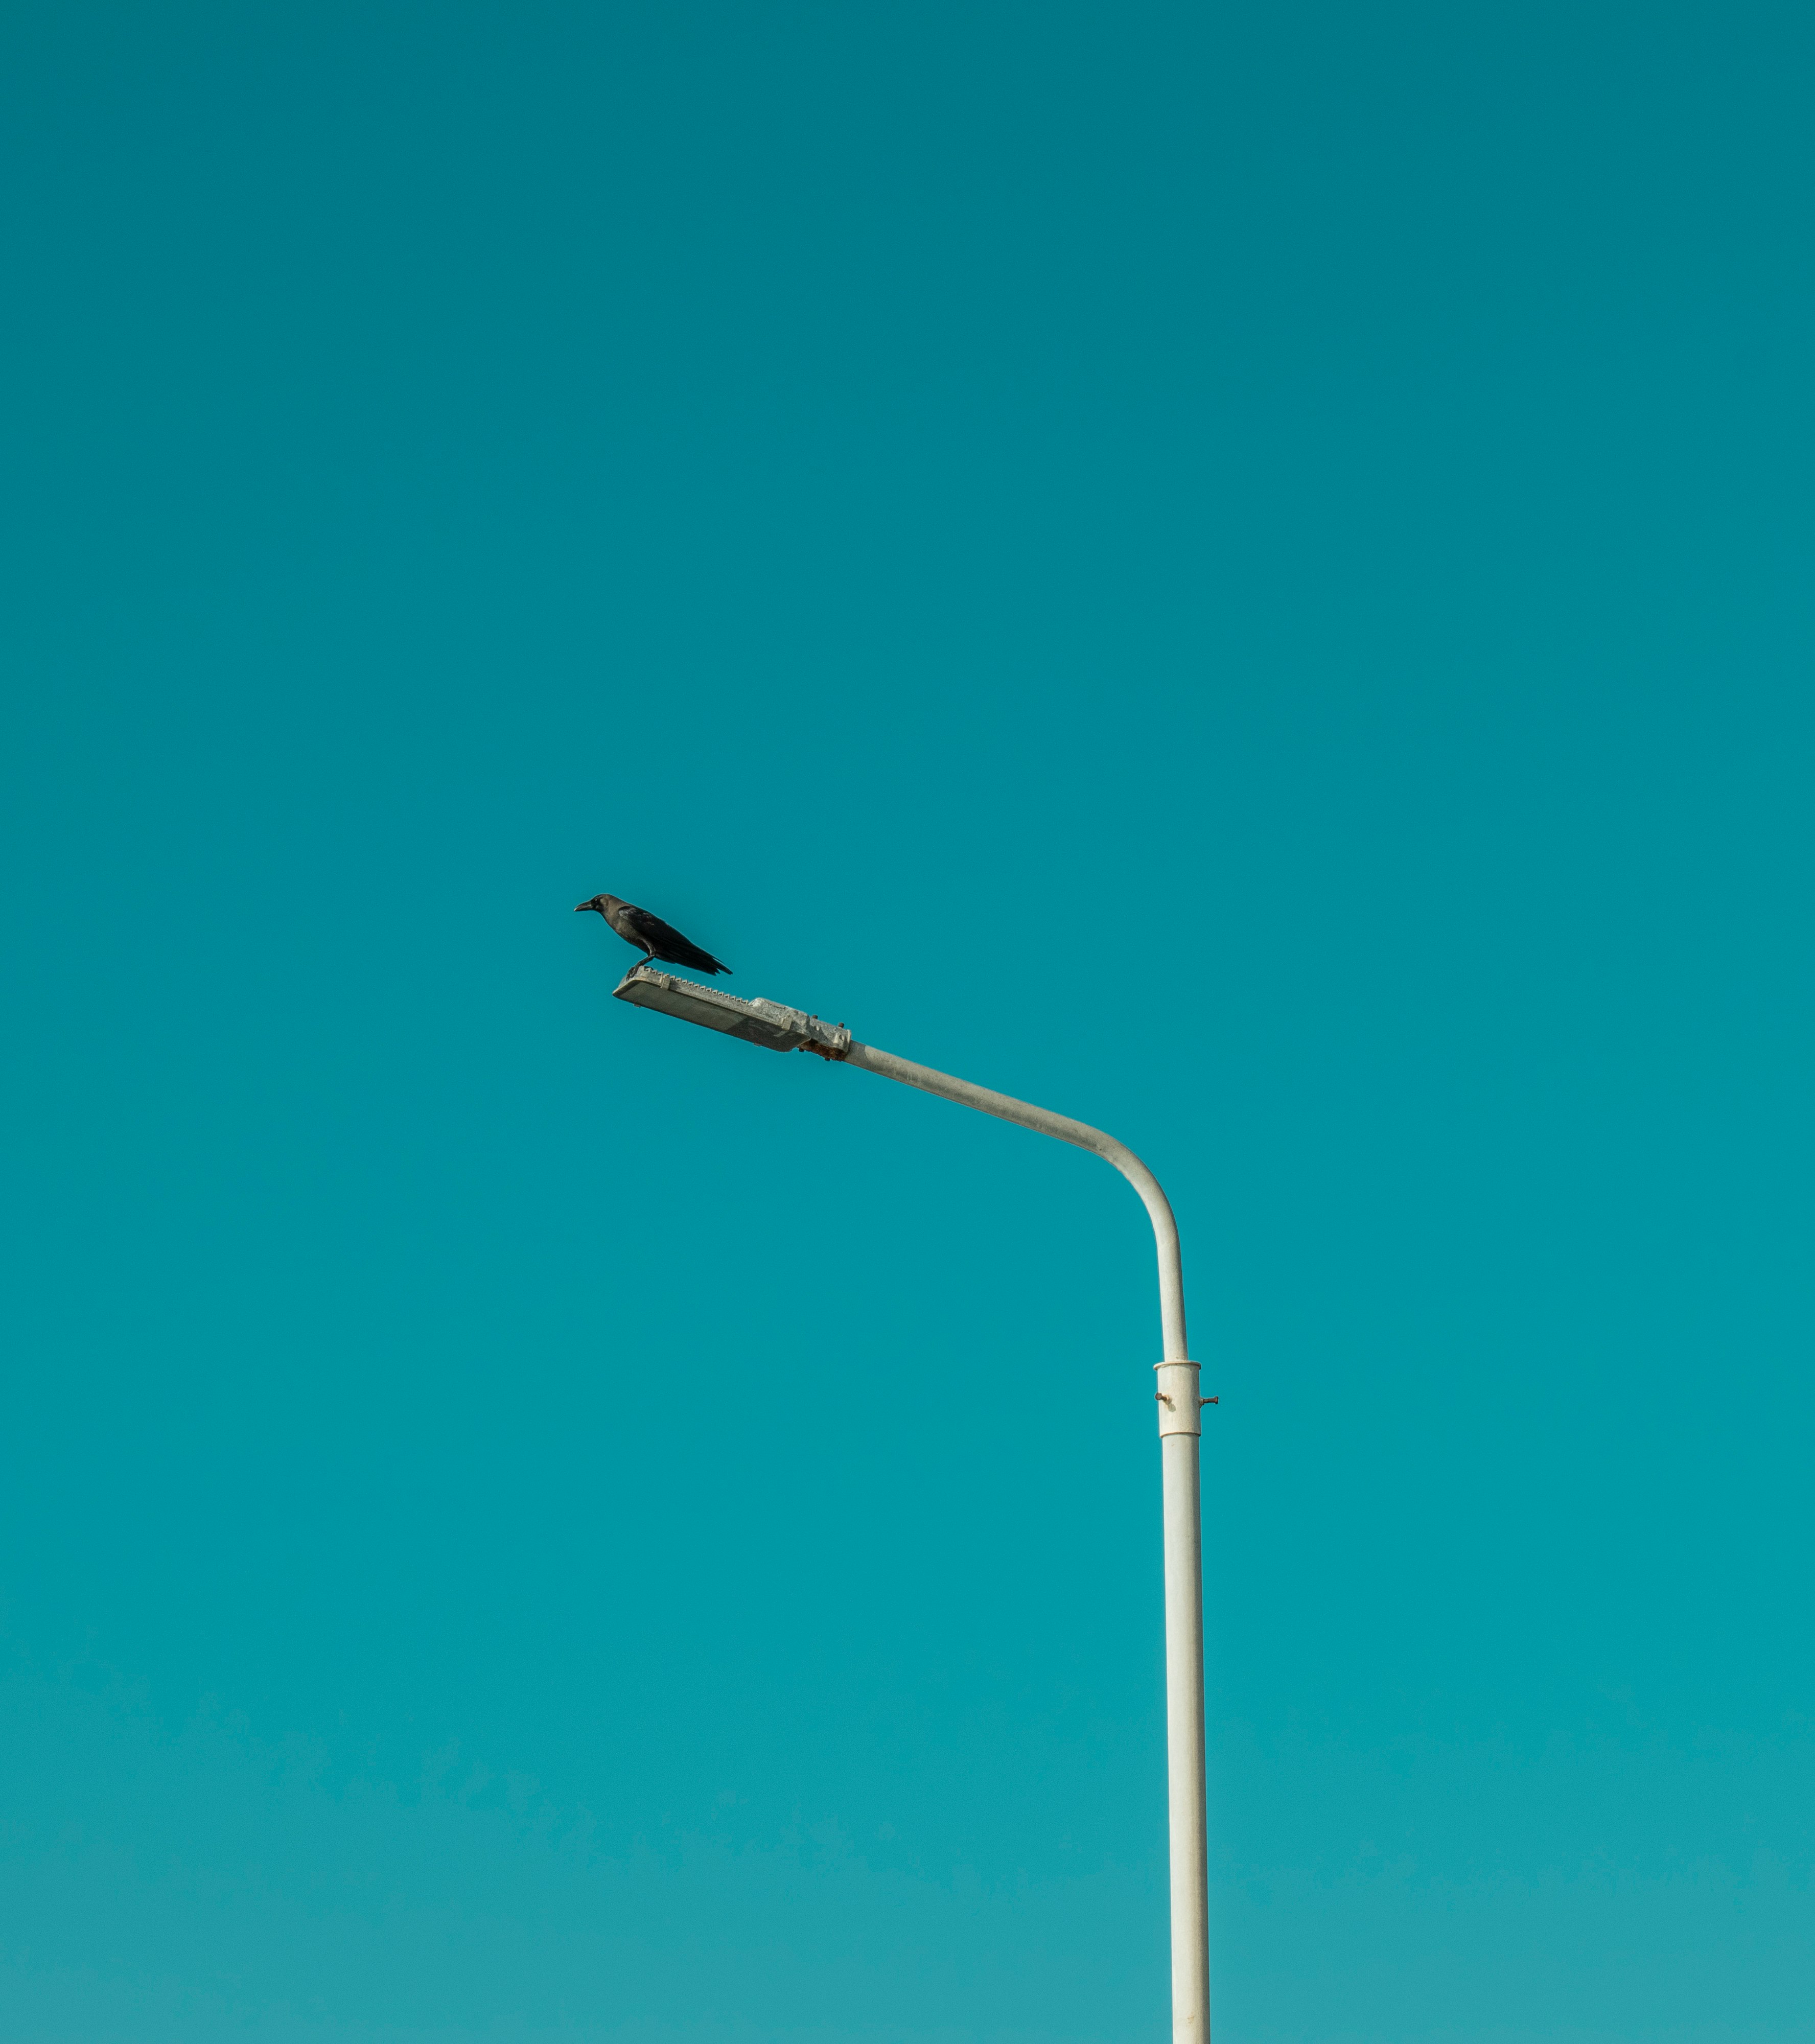 bird flying over white metal post under blue sky during daytime